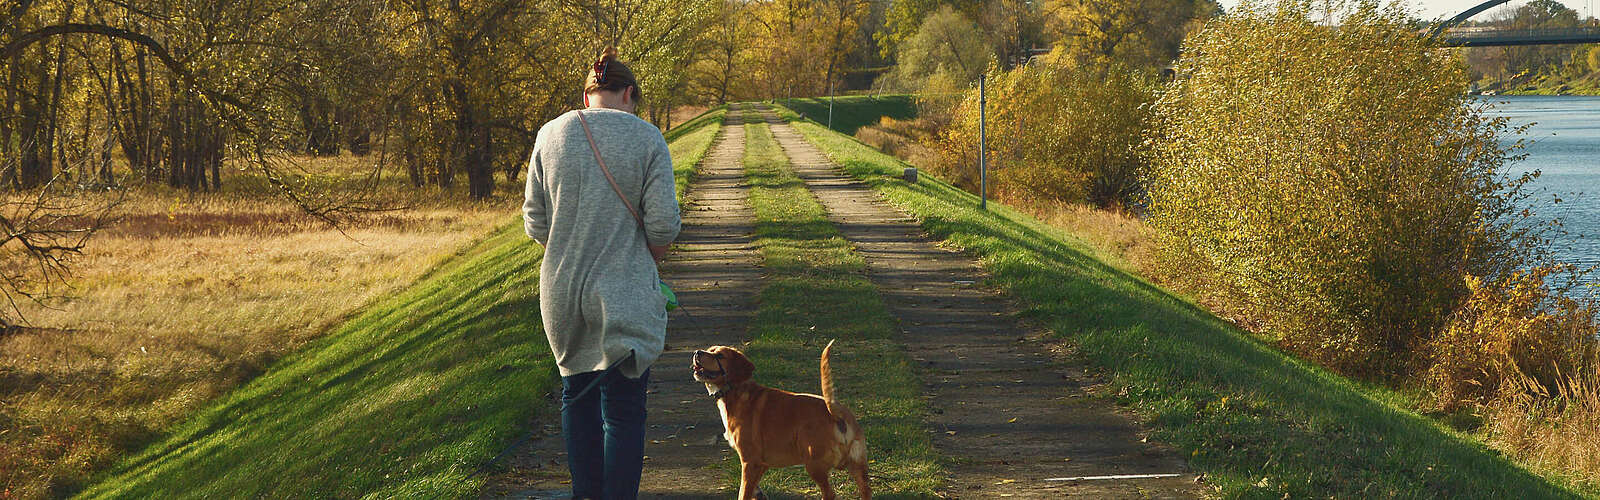 Wandern mit Hund,
        
    

        Foto: Pixabay/Peggy Choucair